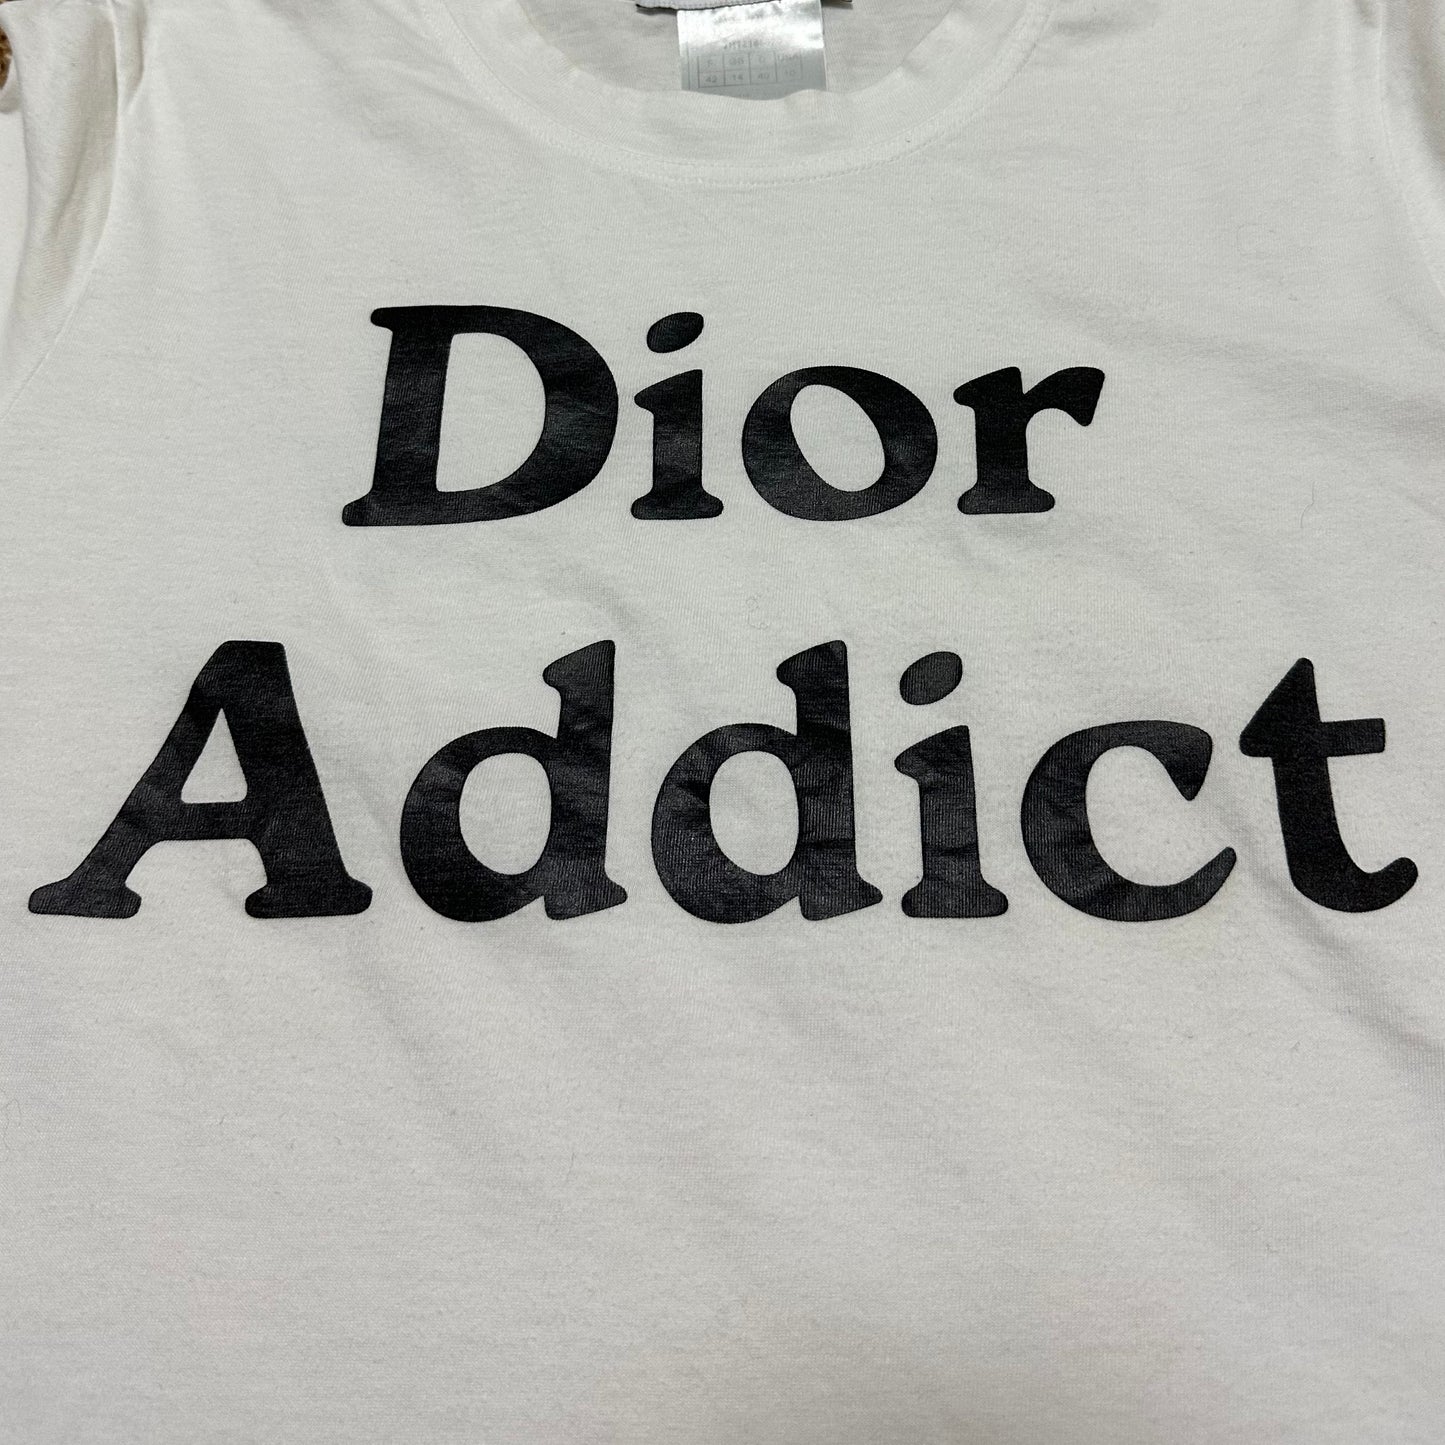 CHRISTIAN DIOR 2002 "Dior Addict" T-Shirt